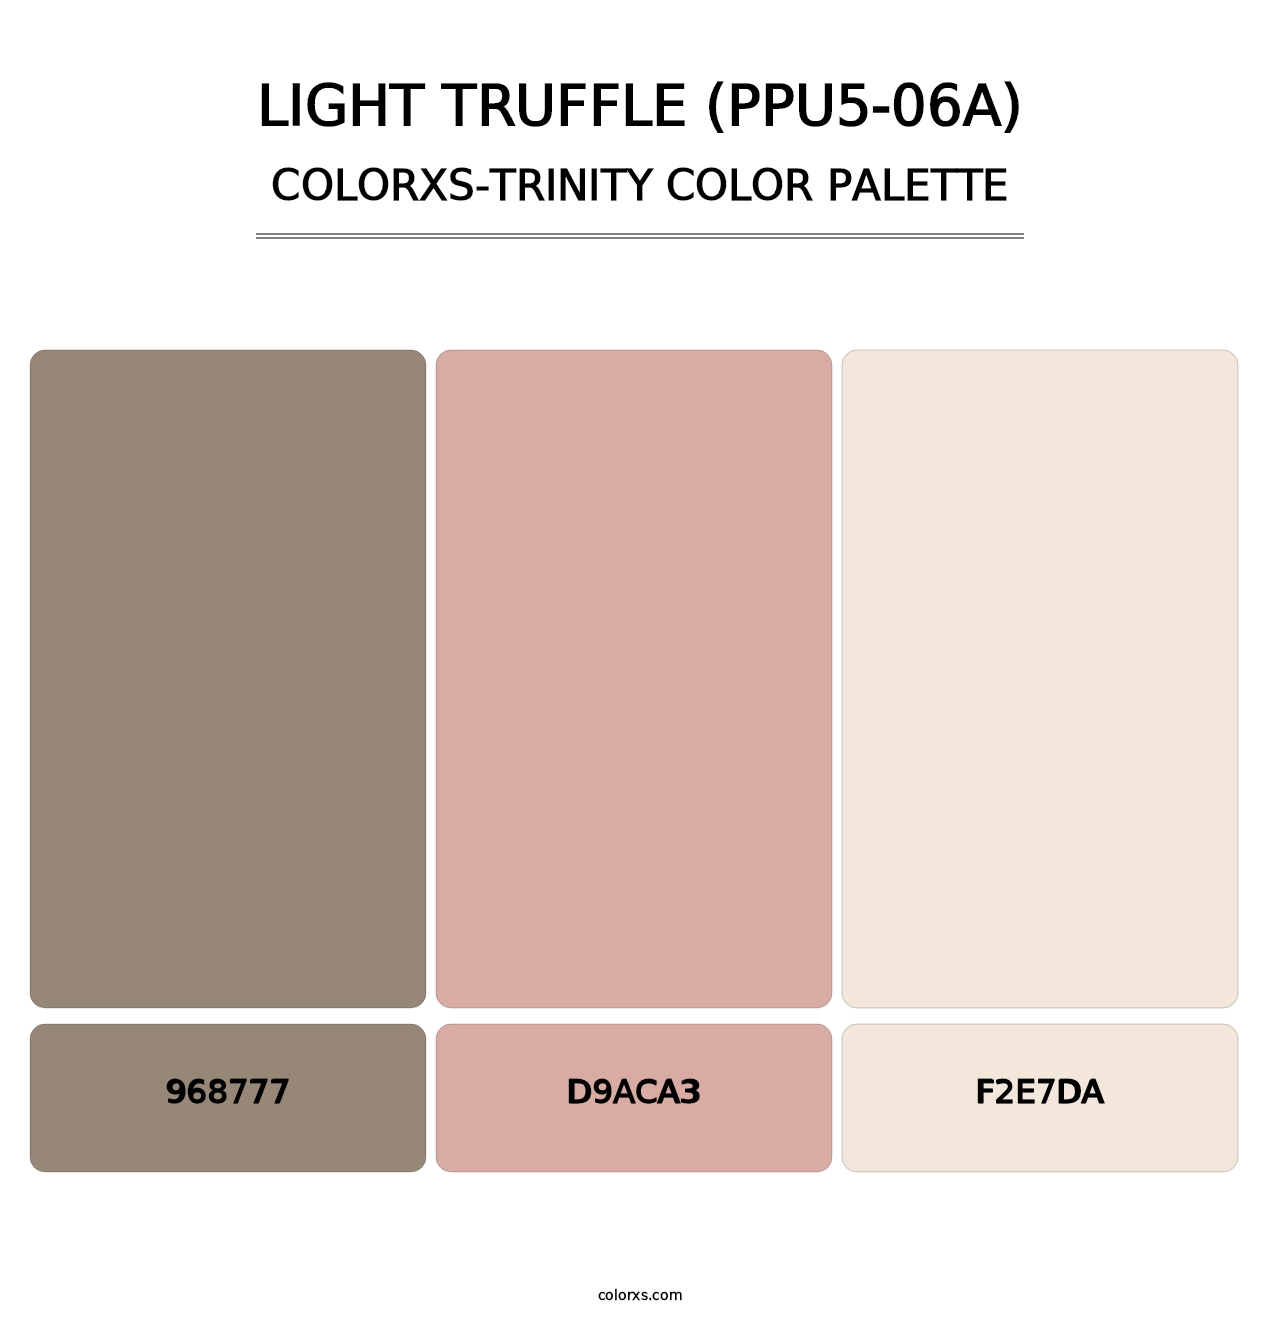 Light Truffle (PPU5-06A) - Colorxs Trinity Palette